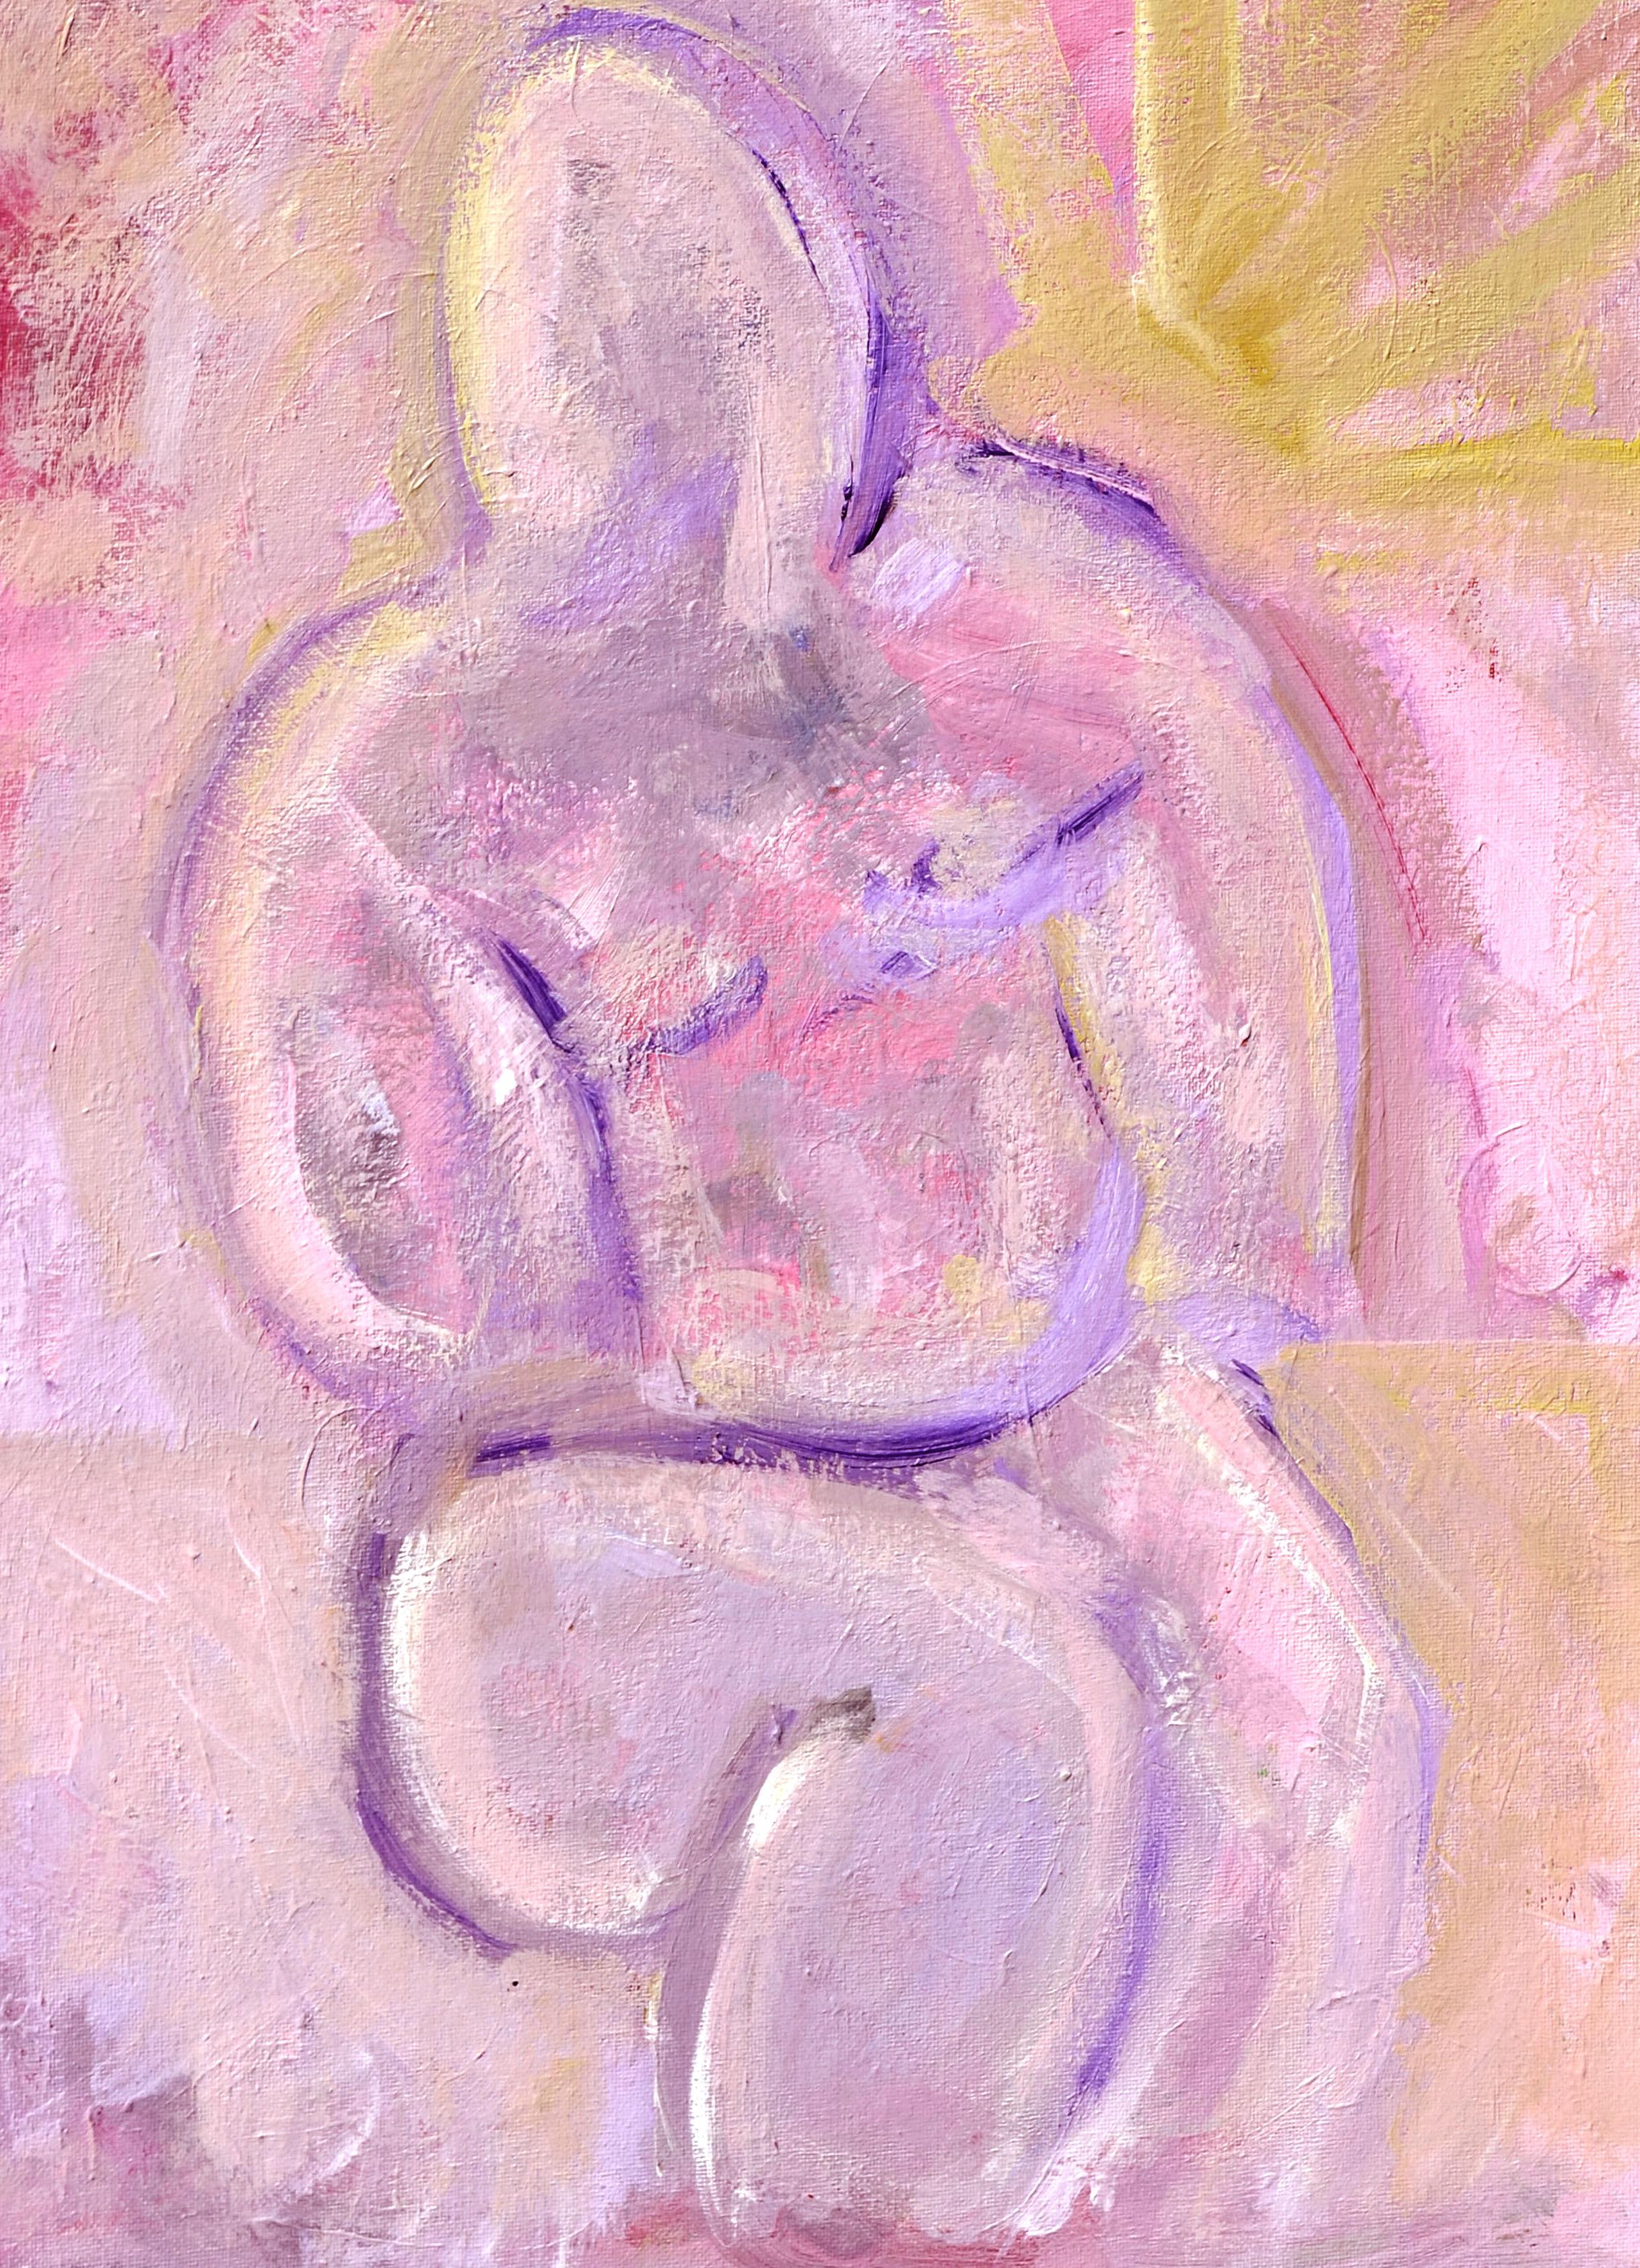 Abstrakter Expressionismus – Rosa figuraler Stil  – Painting von Daniel David Fuentes